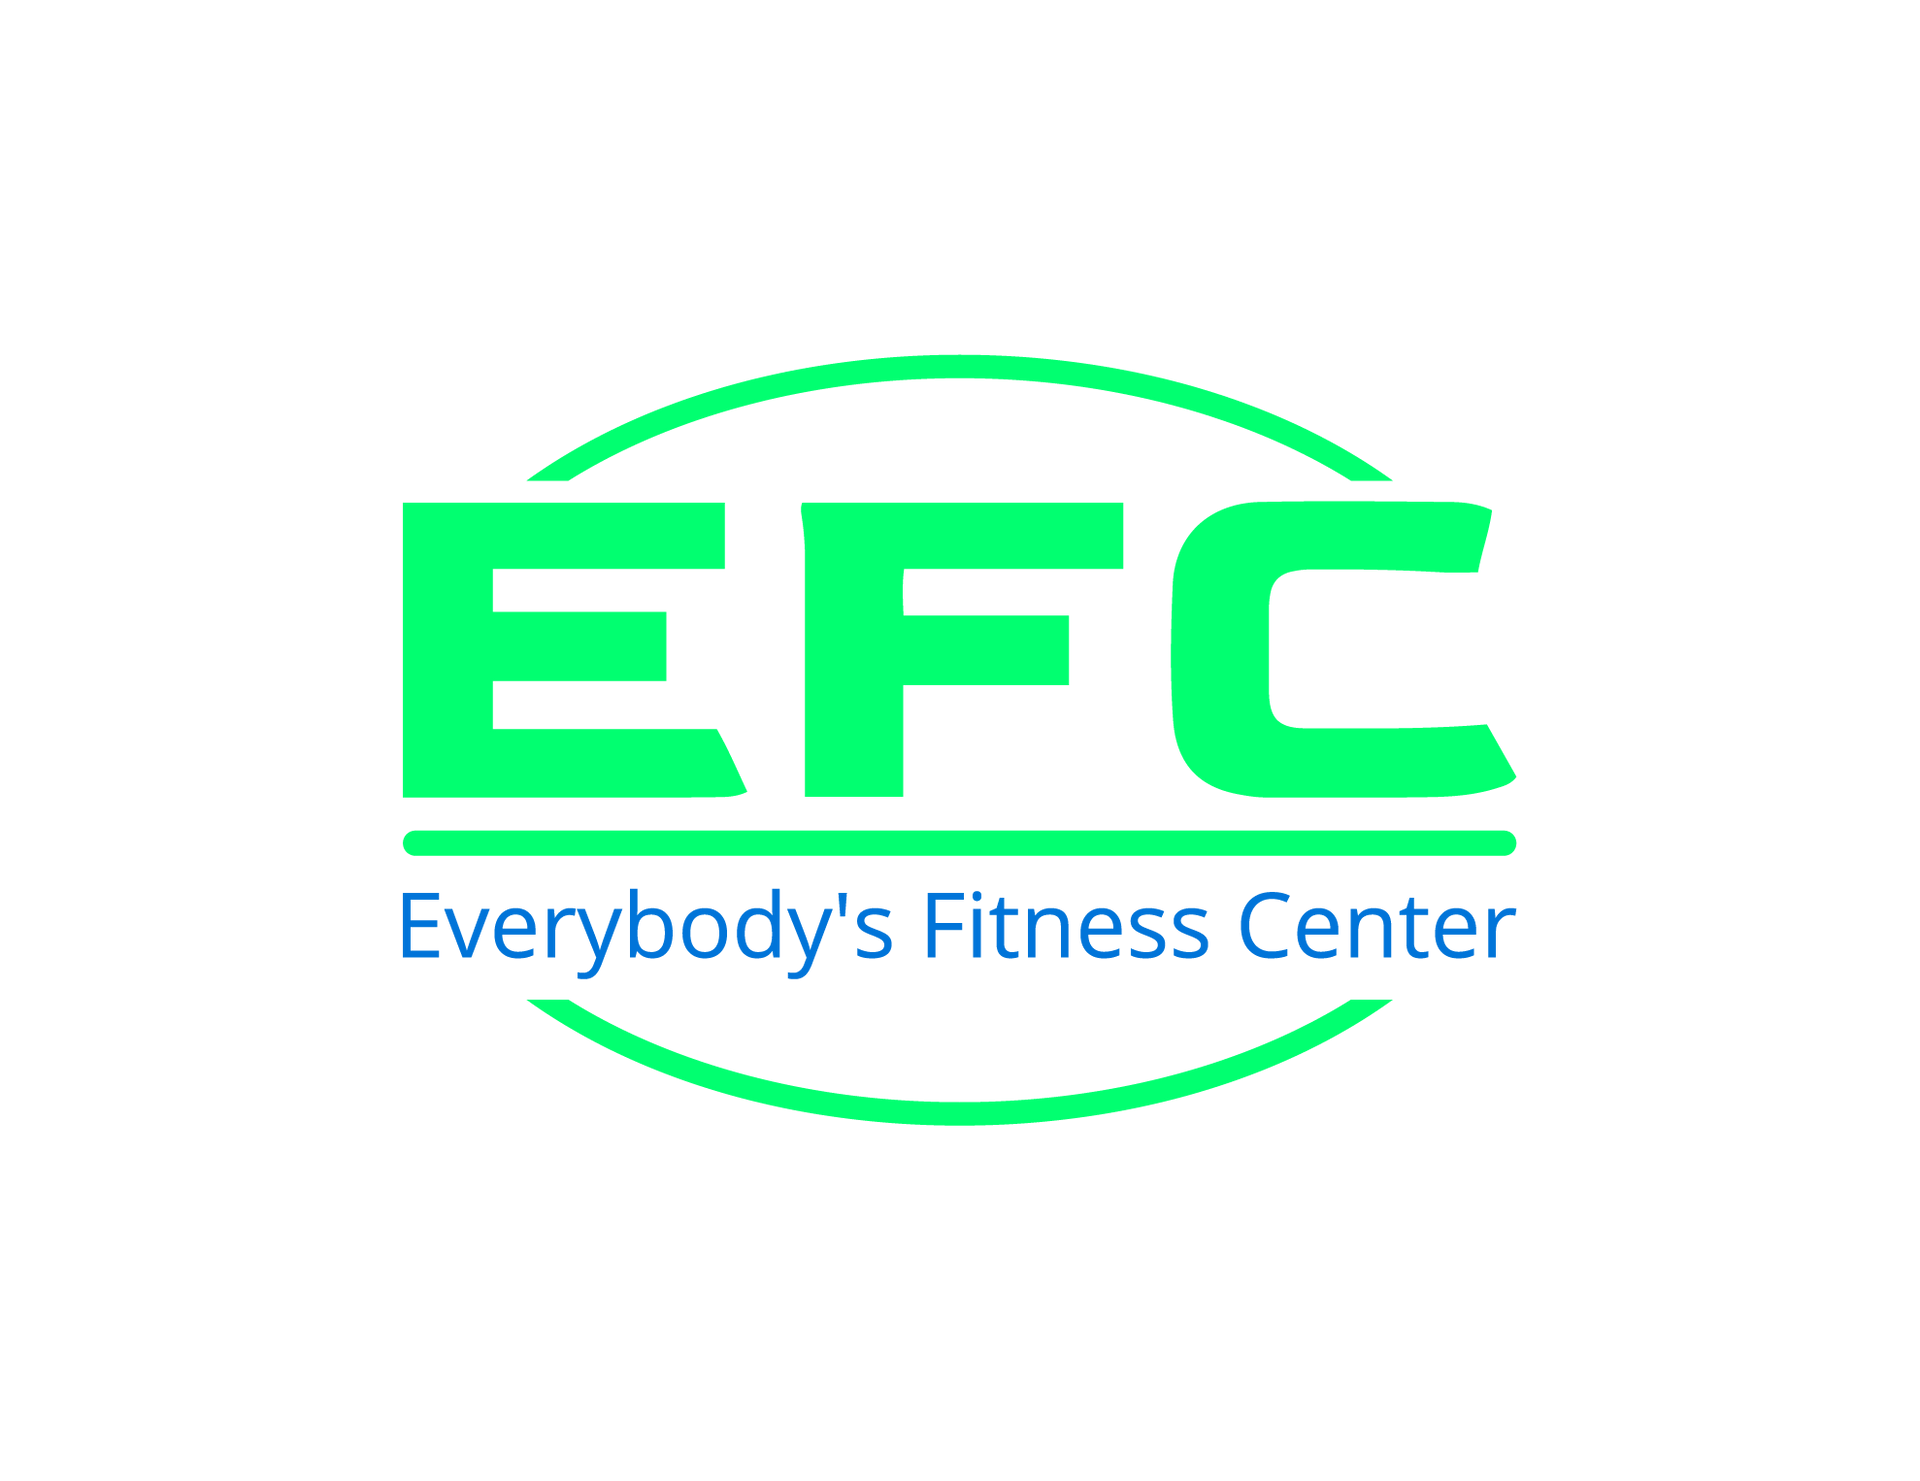 Everybody's Fitness Center Auburn and Sturbridge MA